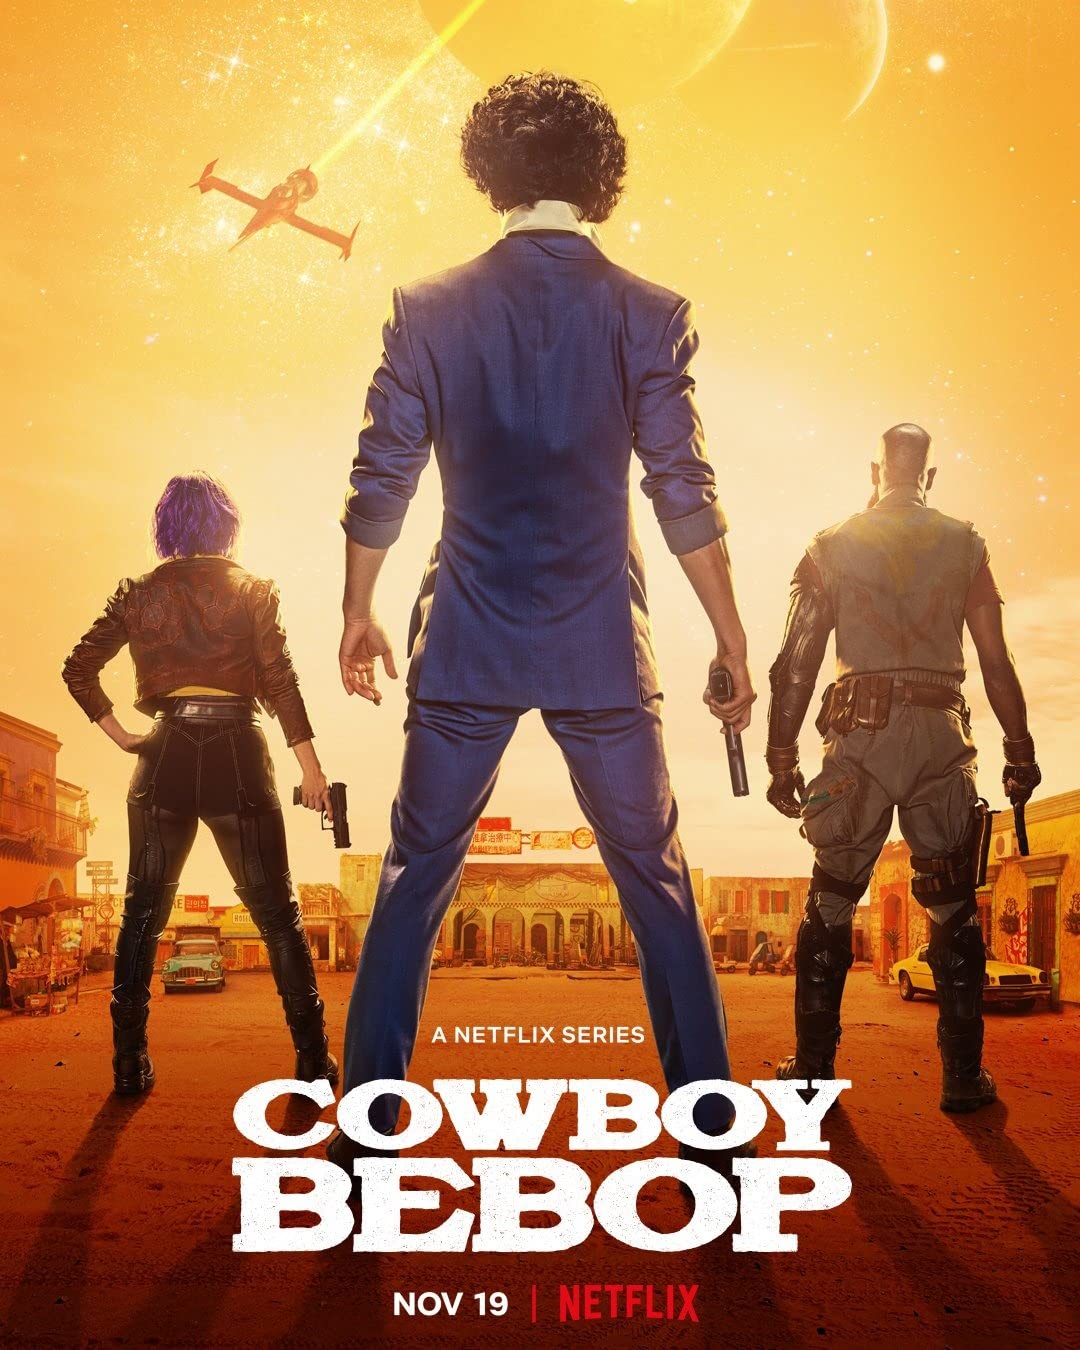 Netflix Cowboy Bebop Trailer, Coming to Netflix in November 2021